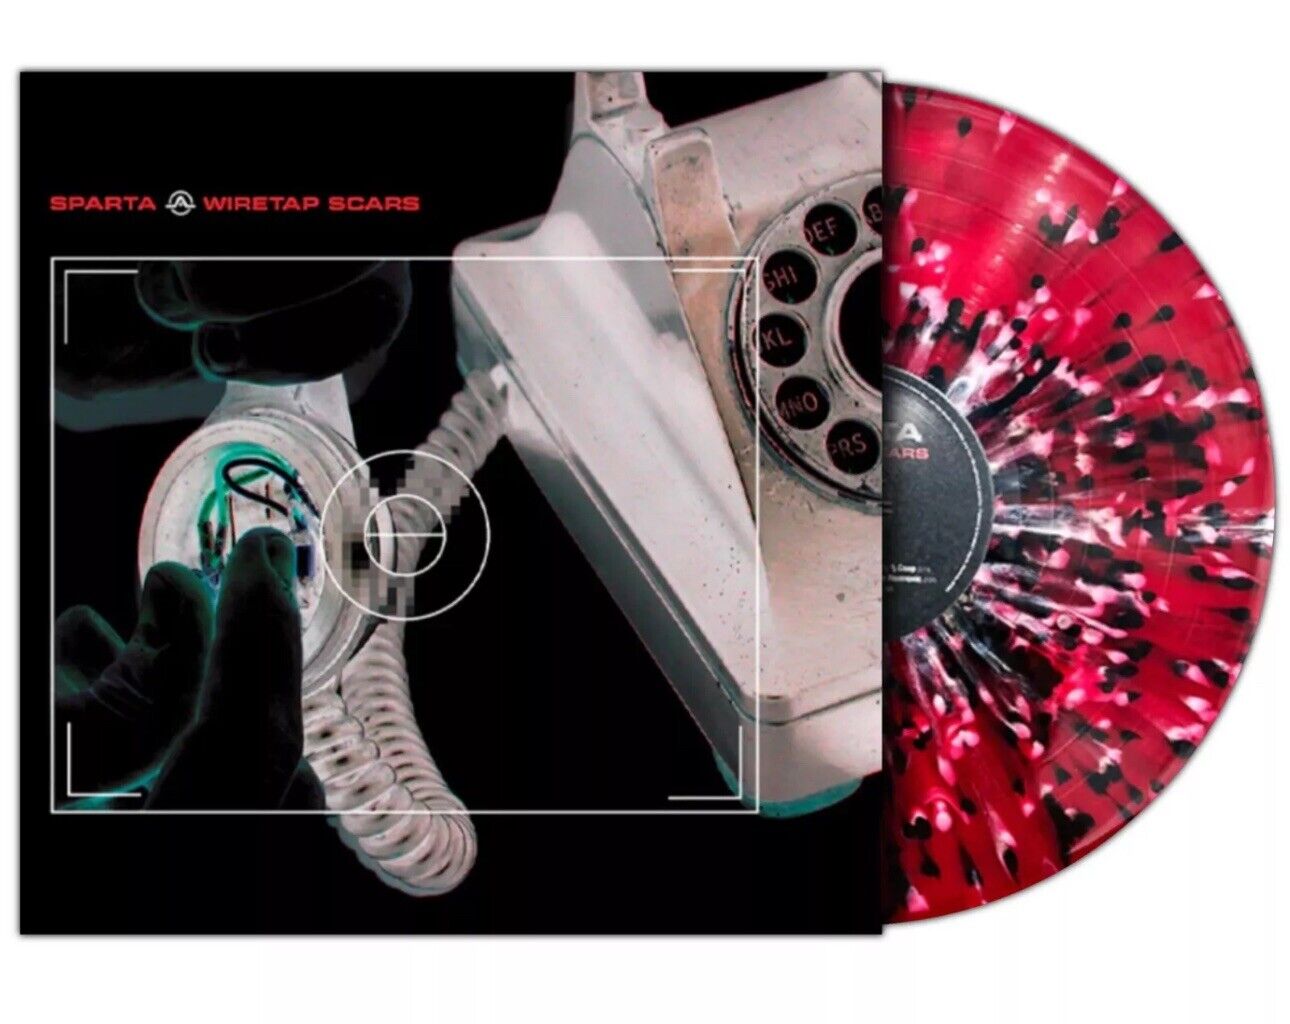 Sparta - Wiretap Scars LP Red w/ White & Black Splatter Vinyl LTD ED of 350 NEW